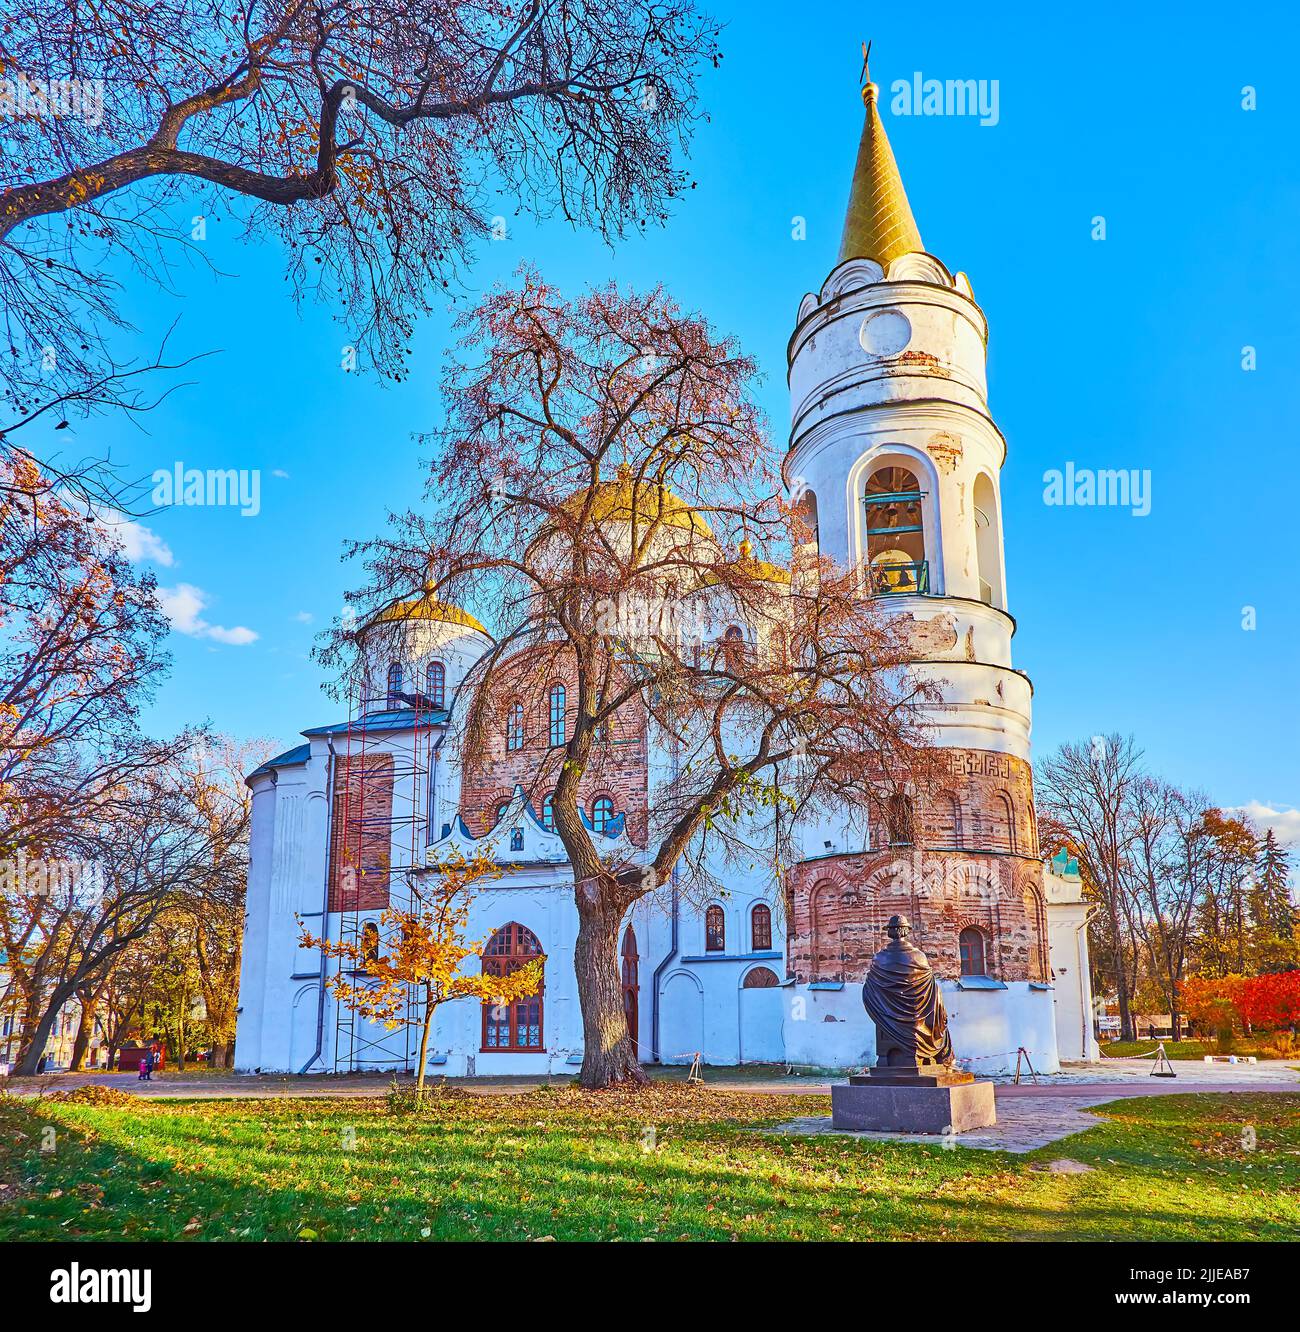 The colored autumn plants around the medieval Transfiguration Cathedral, located in Chernihiv Dytynets (Chernigov Citadel) Park, Chernihiv, Ukraine Stock Photo